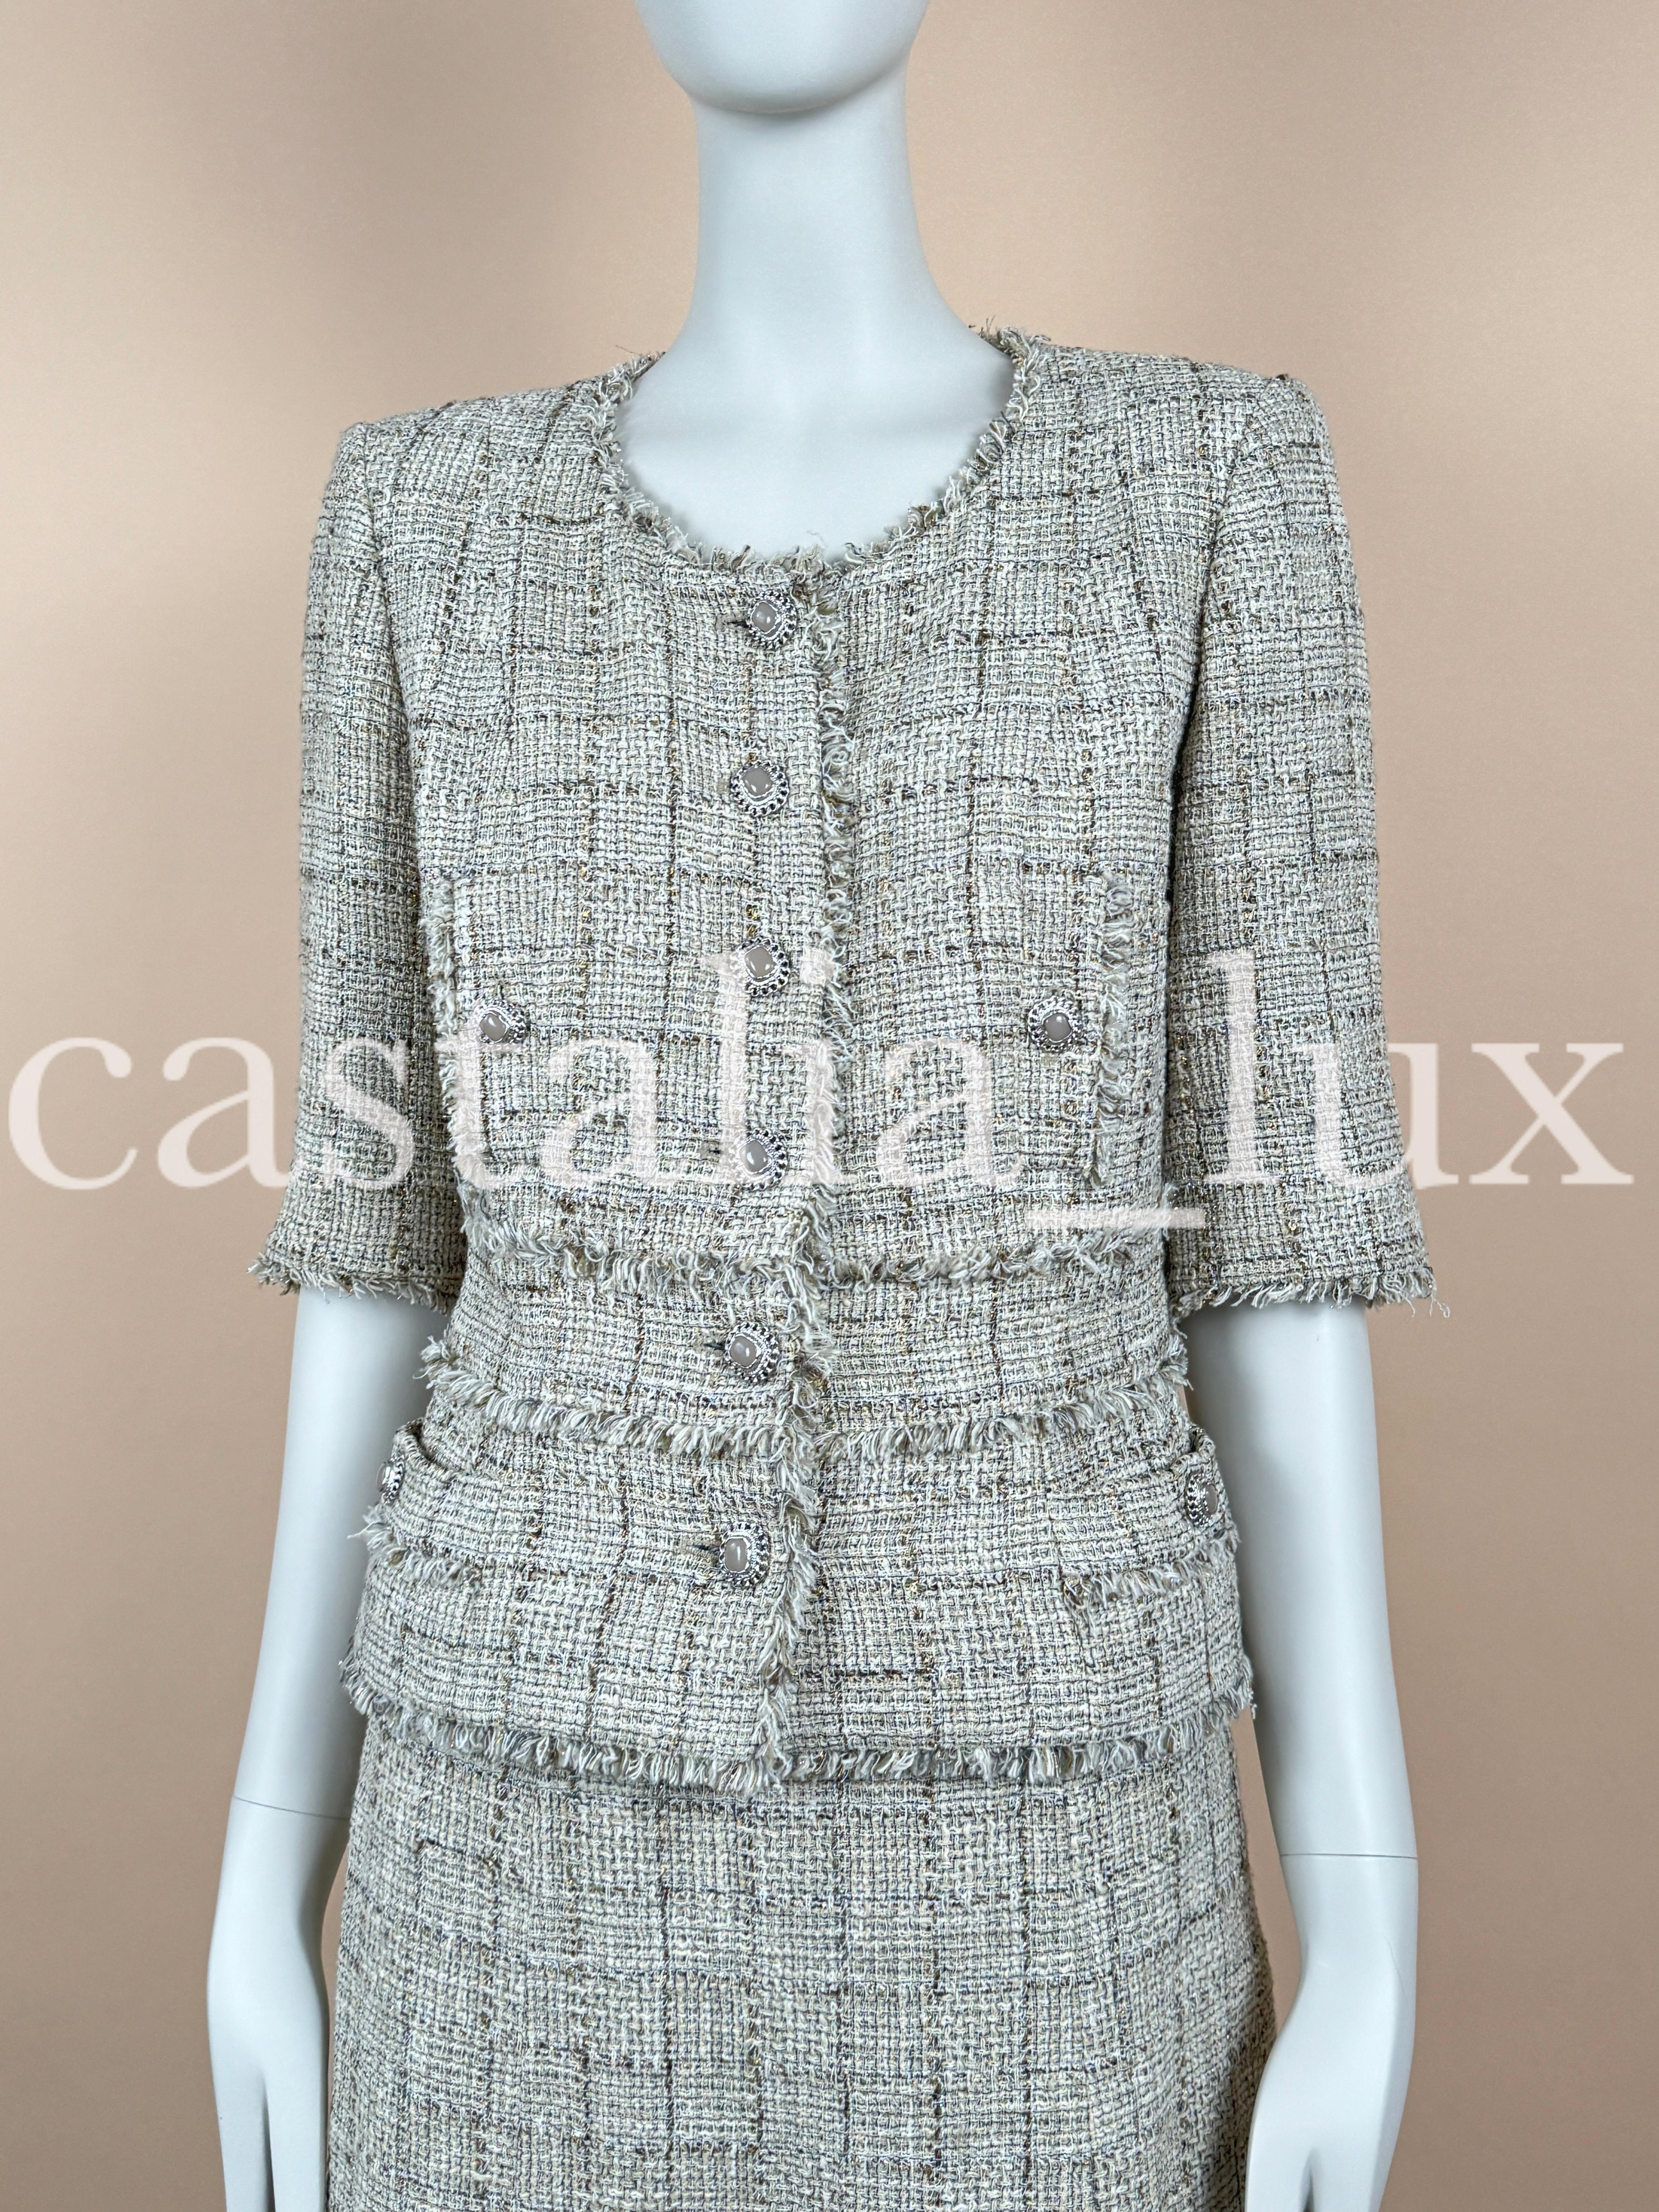 Chanel Gisele Bundchen Style Jewel Buttons Tweed Suit For Sale 12